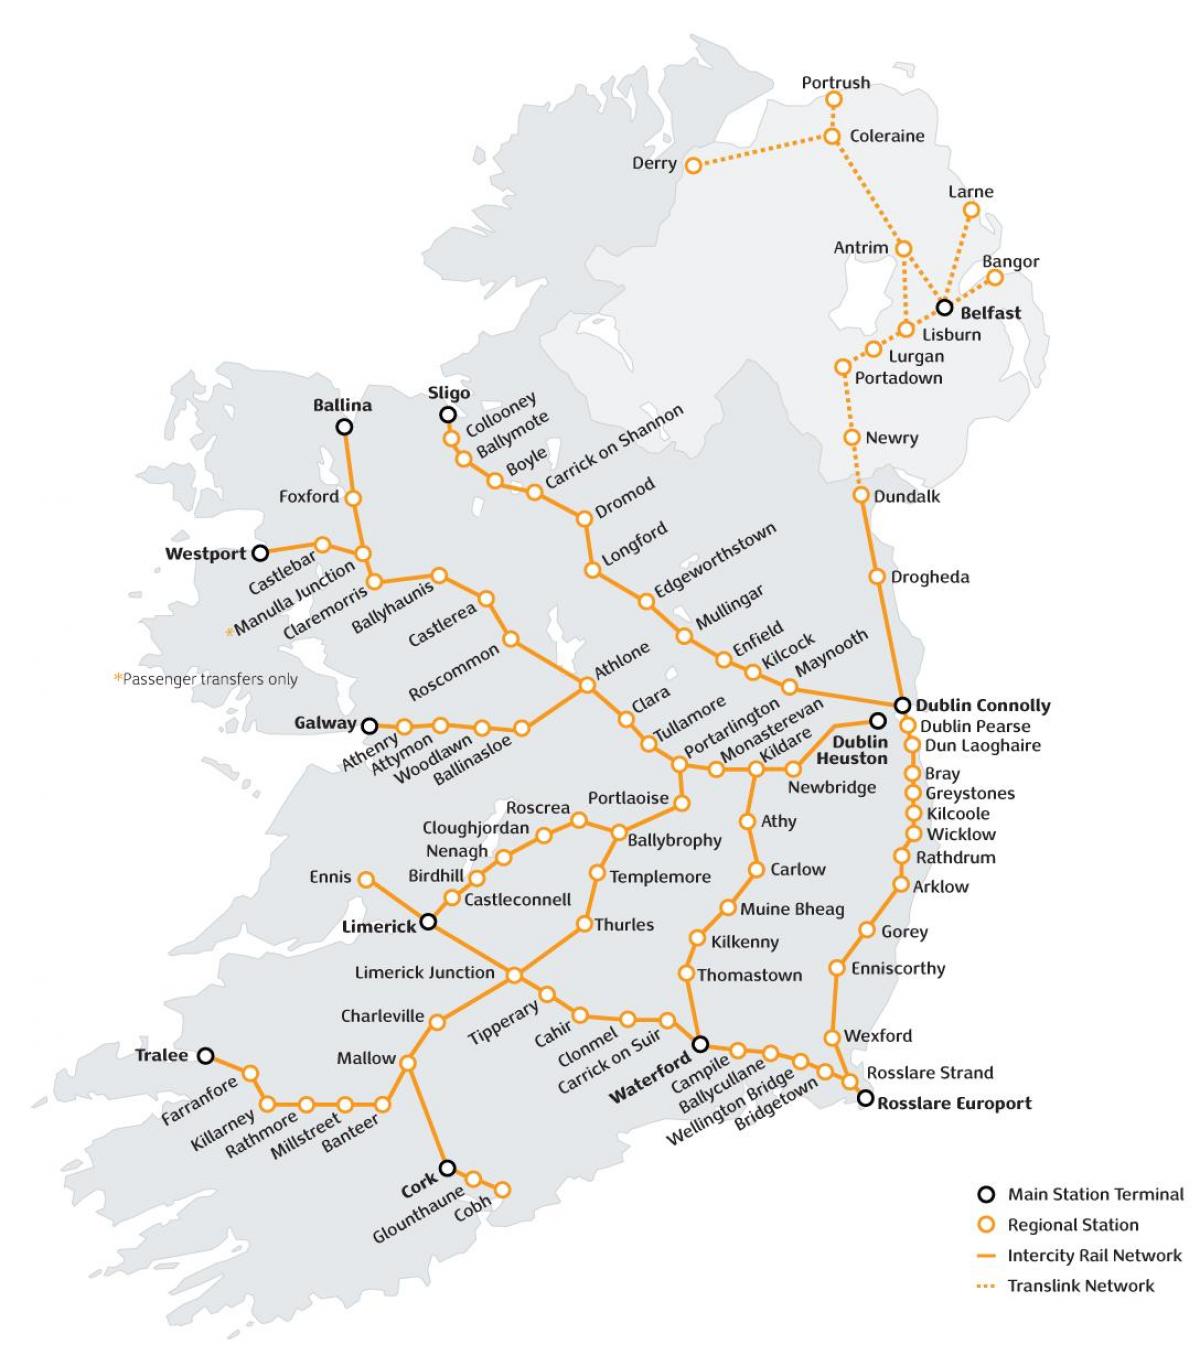 Irlanti juna kartta - Junan matka-irlannin kartta (Pohjois-Eurooppa -  Eurooppa)